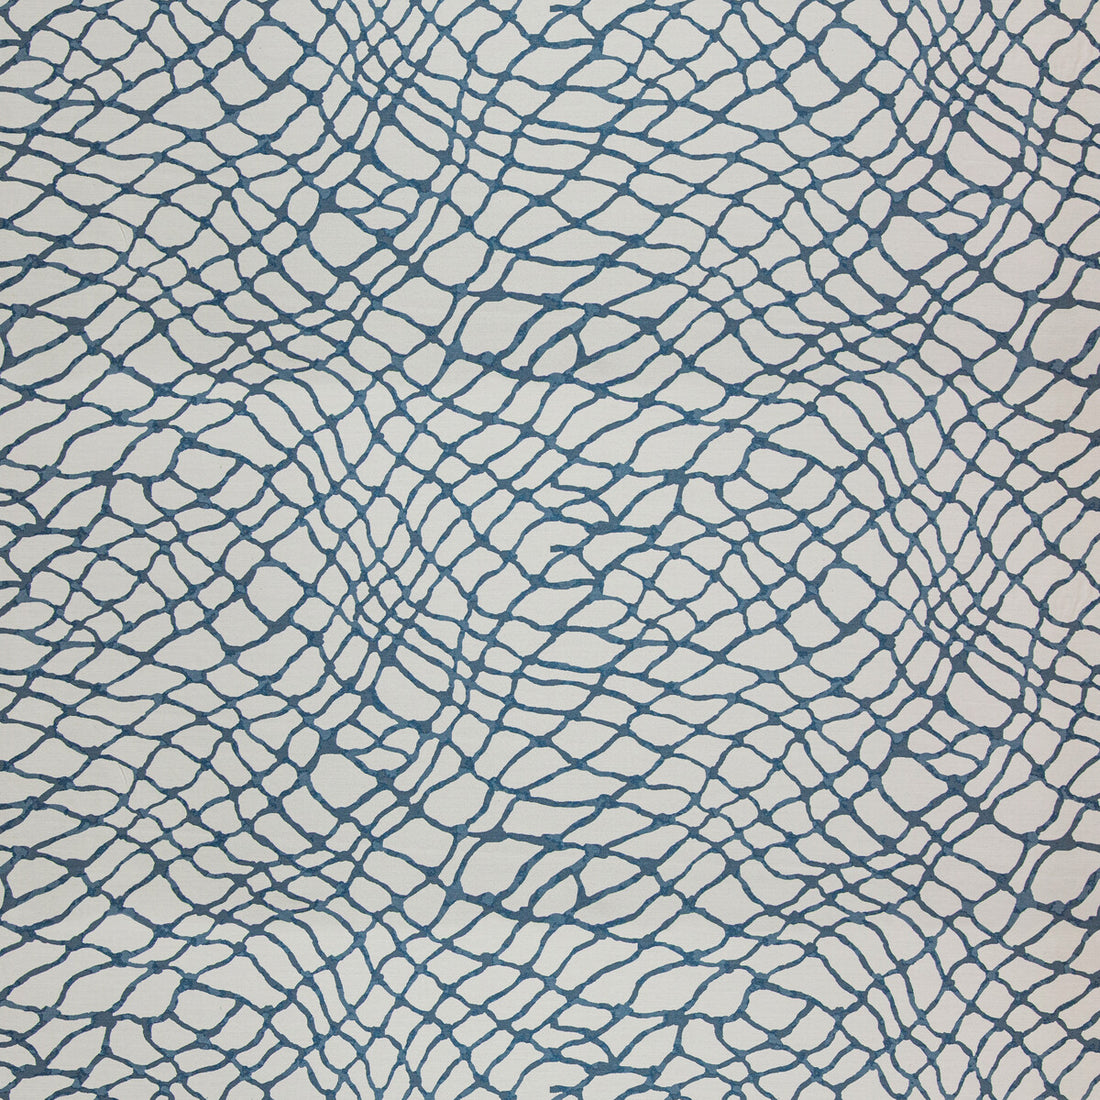 Hawser fabric in ocean color - pattern 35819.5.0 - by Kravet Design in the Indoor / Outdoor collection